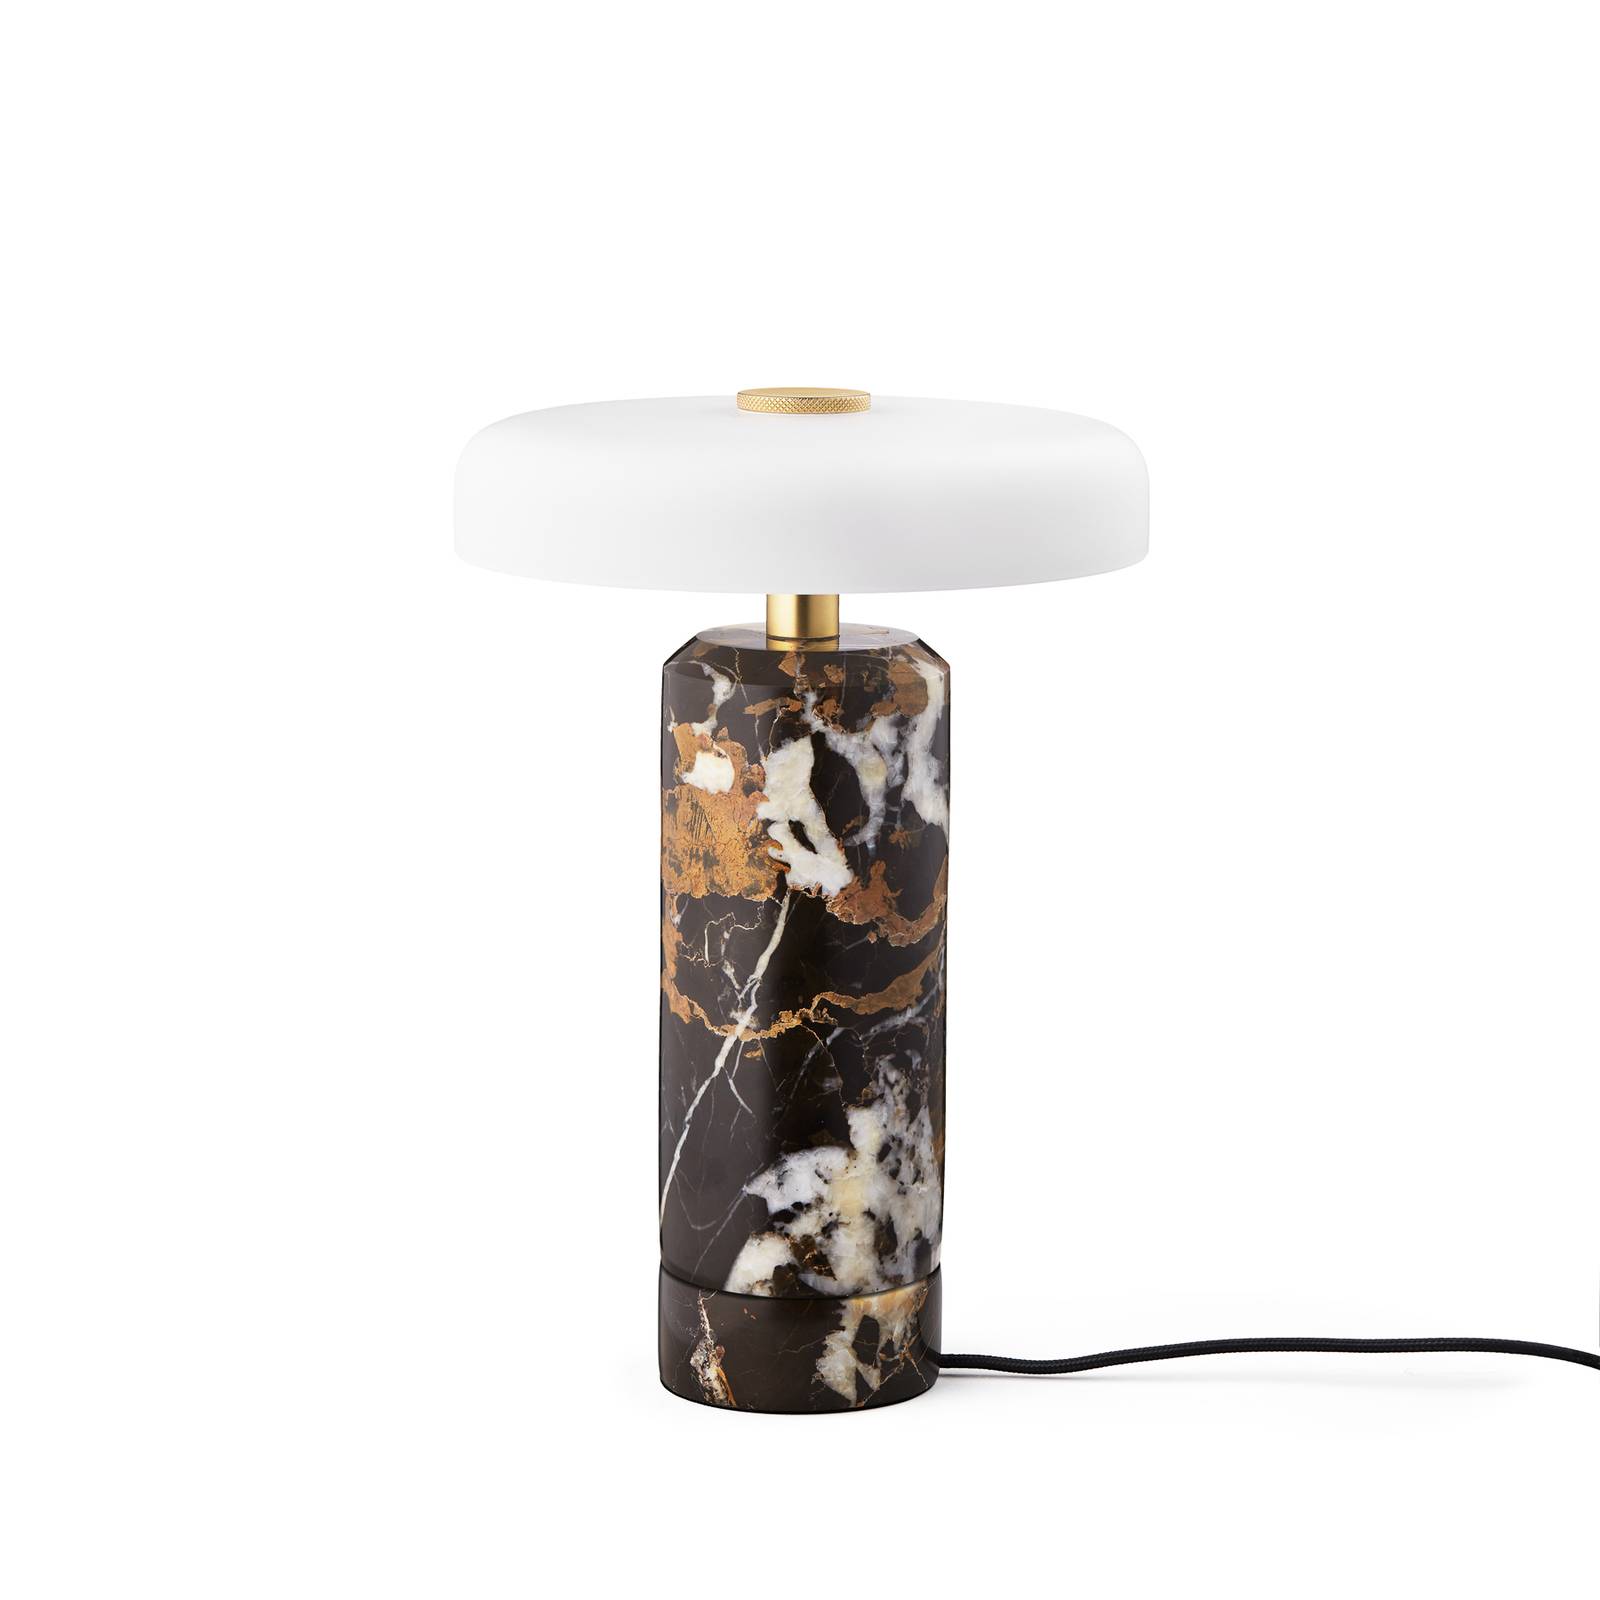 DESIGN BY US Trip LED bordslampa uppladdningsbar färgad / vit marmor glas IP44